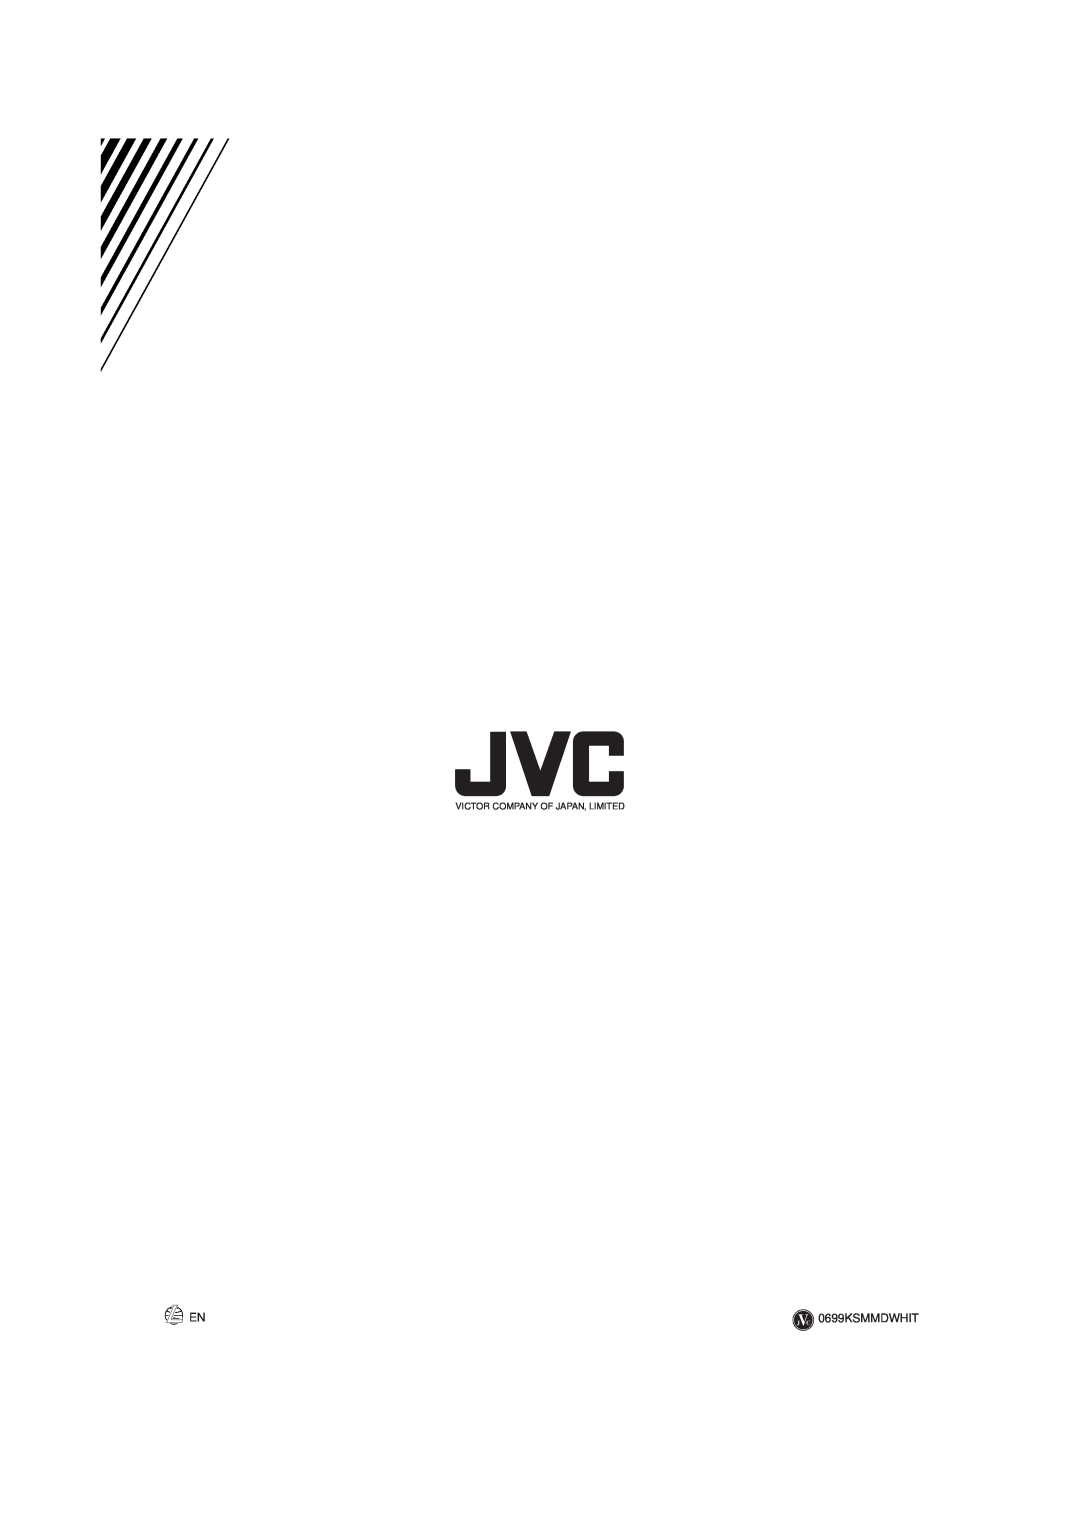 JVC CA-MXJ10 manual 0699KSMMDWHIT, Victor Company Of Japan, Limited 